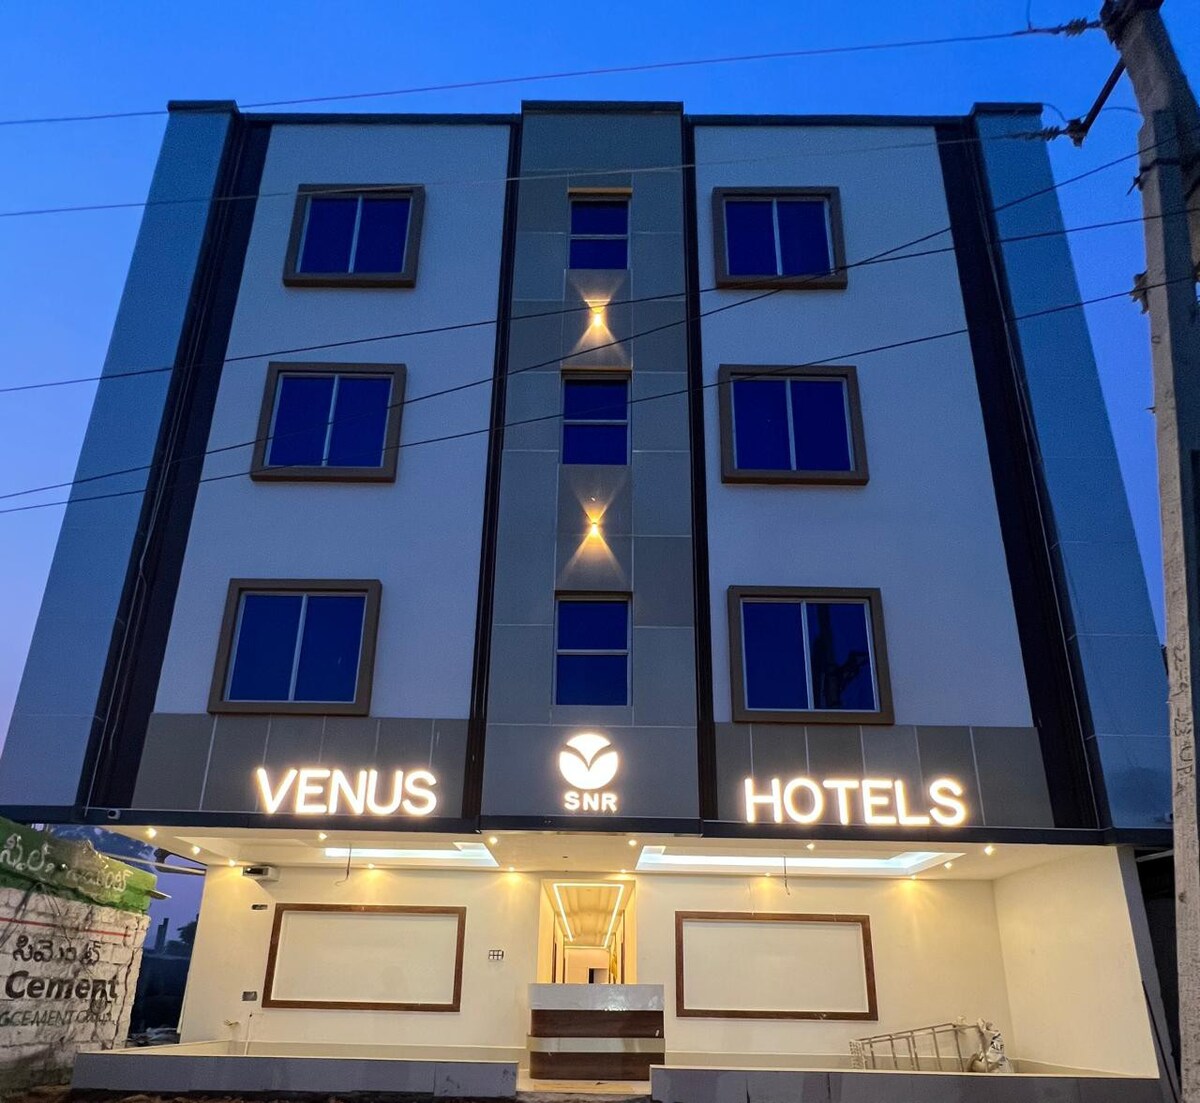 SNR VENUS hotels